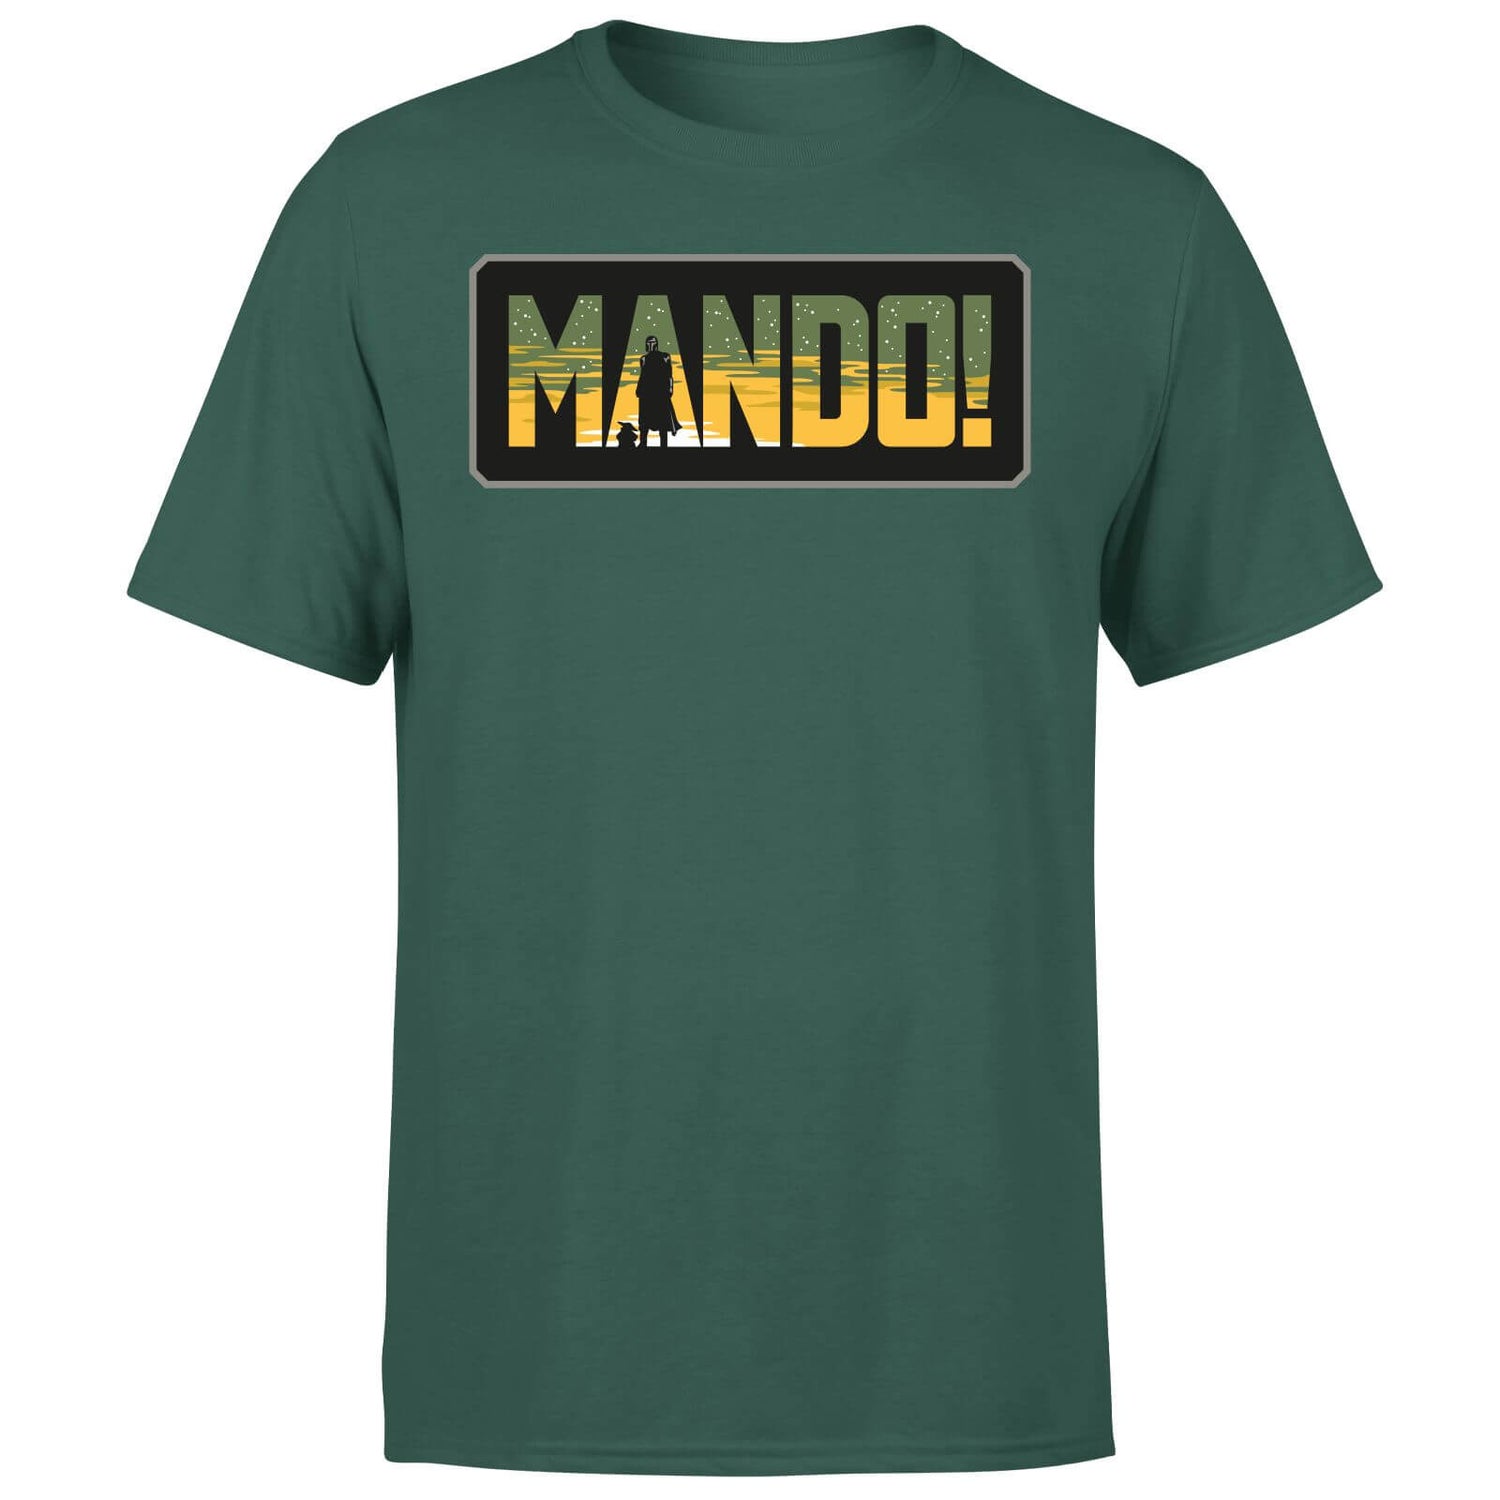 Star Wars The Mandalorian Mando! Men's T-Shirt - Green